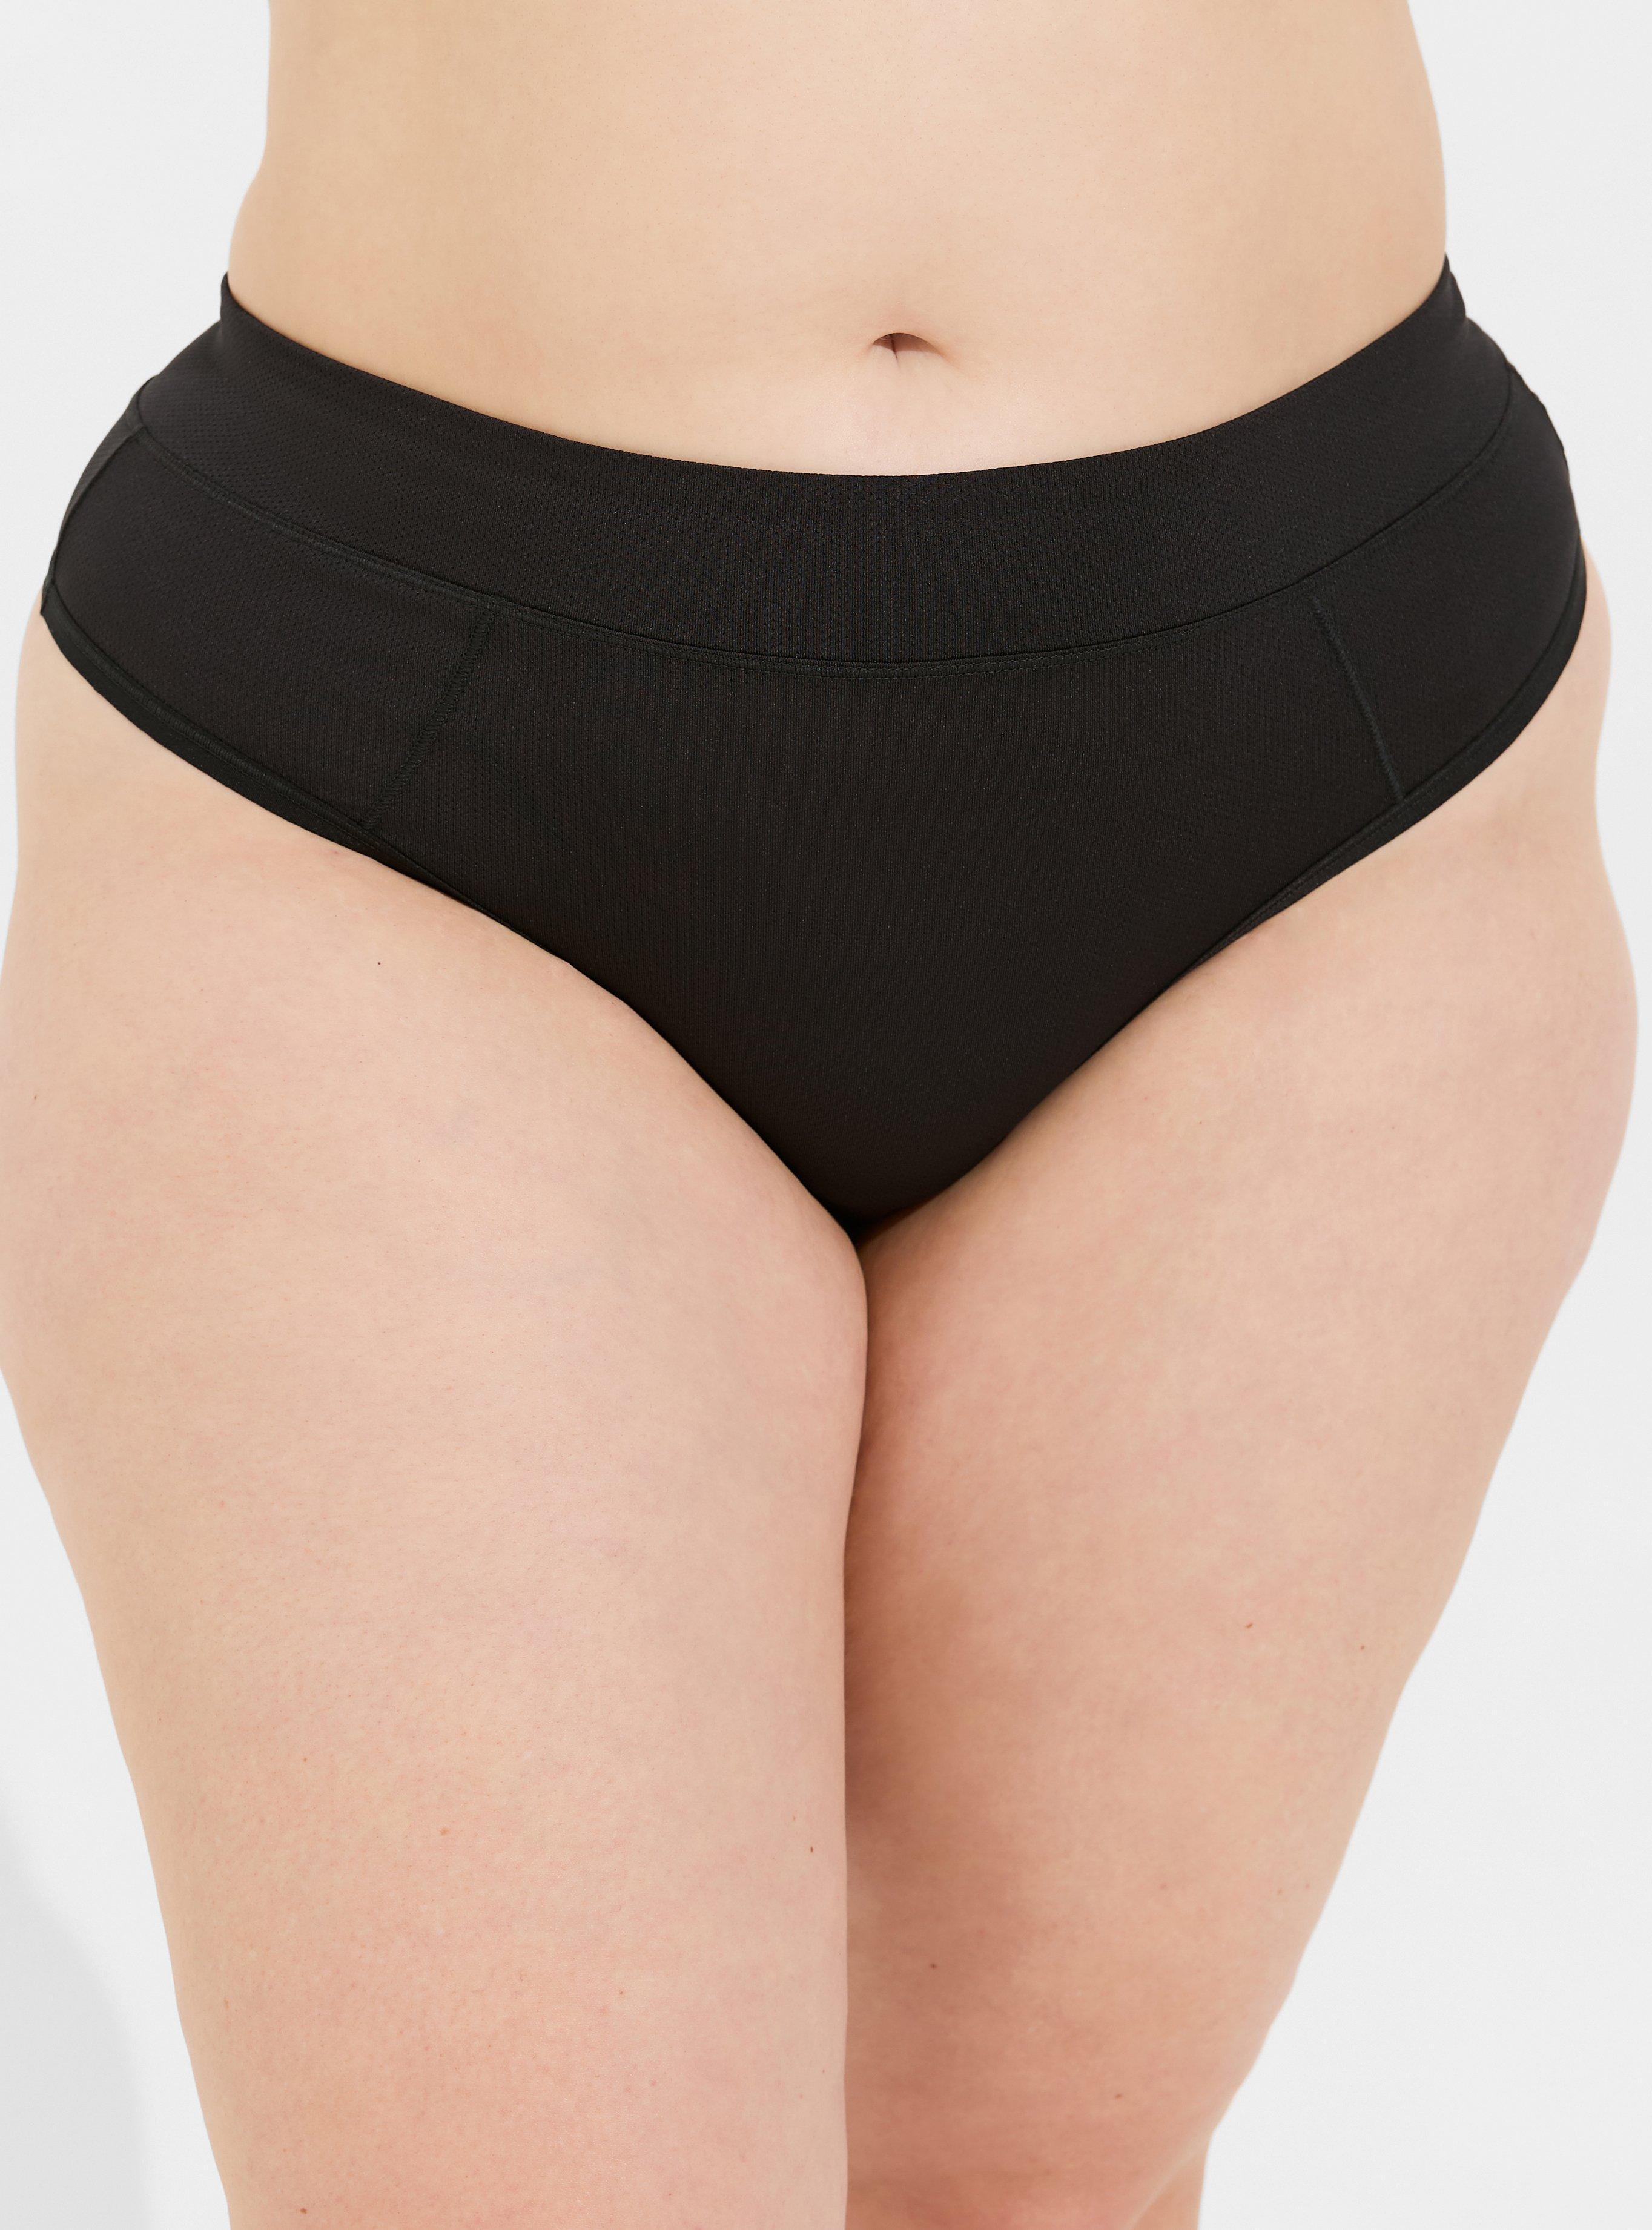 Plus Size - Black Floral Microfiber Thong Panty - Torrid